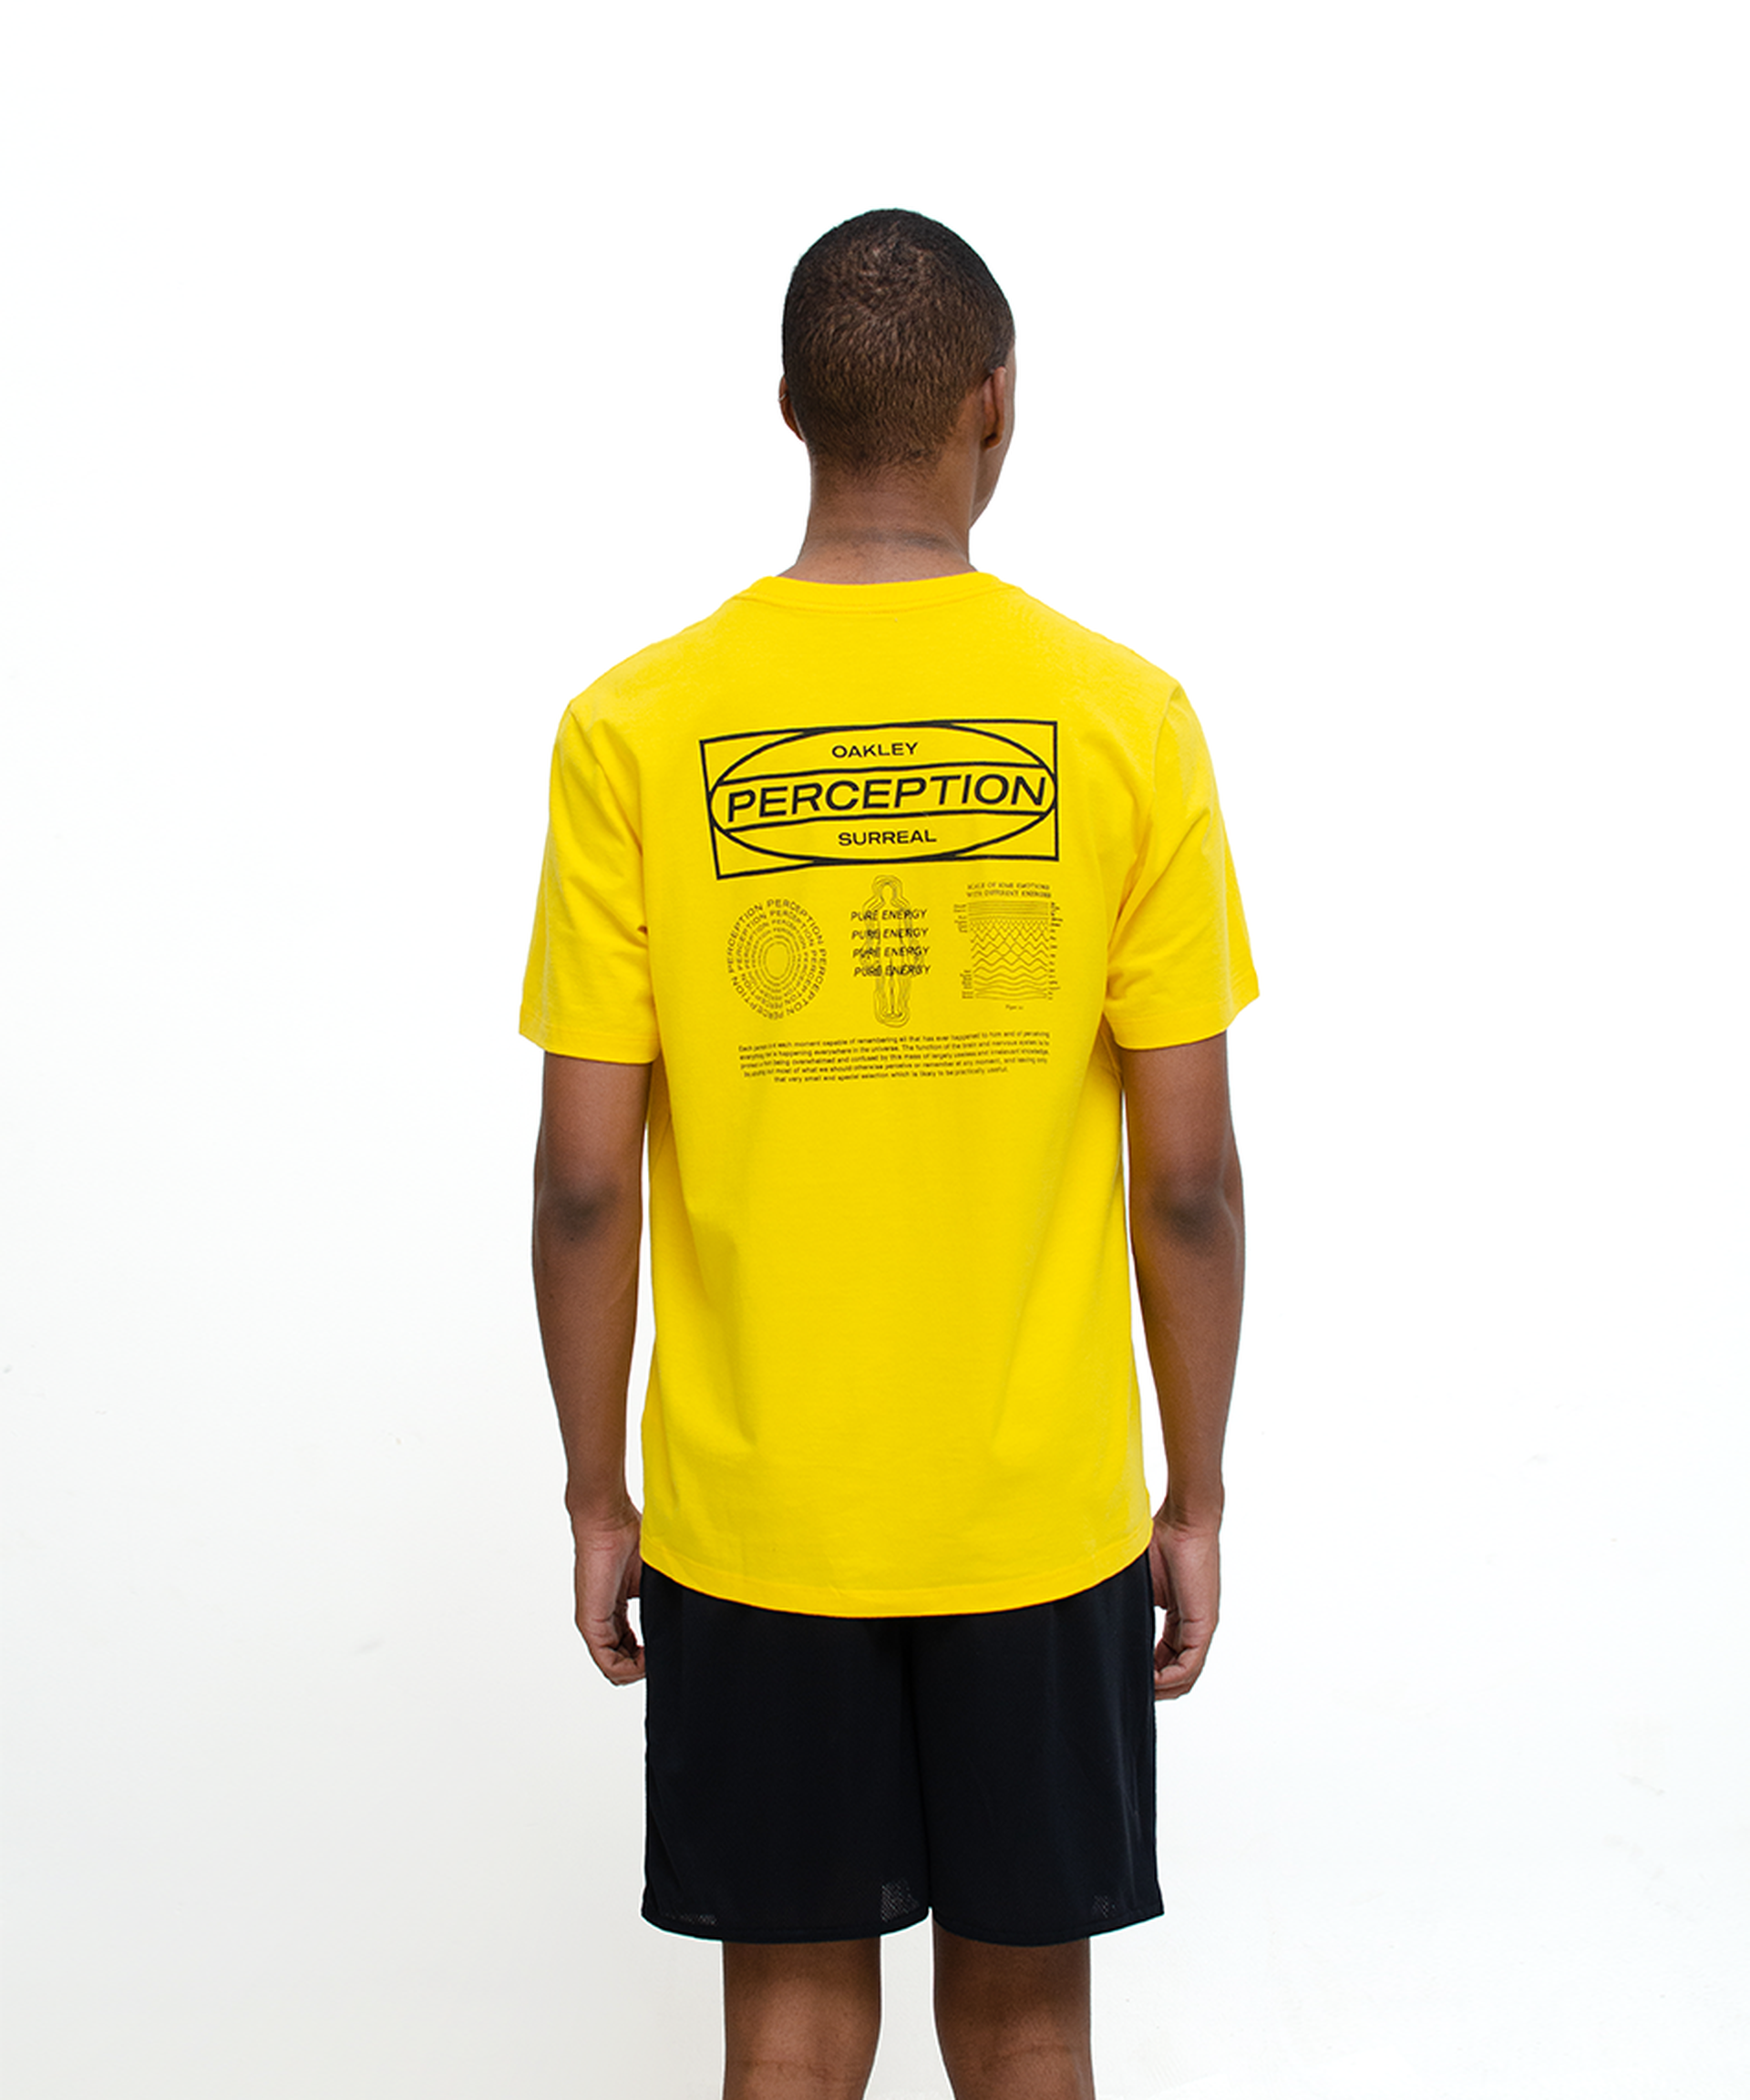 Camiseta Pure Energy Amarela